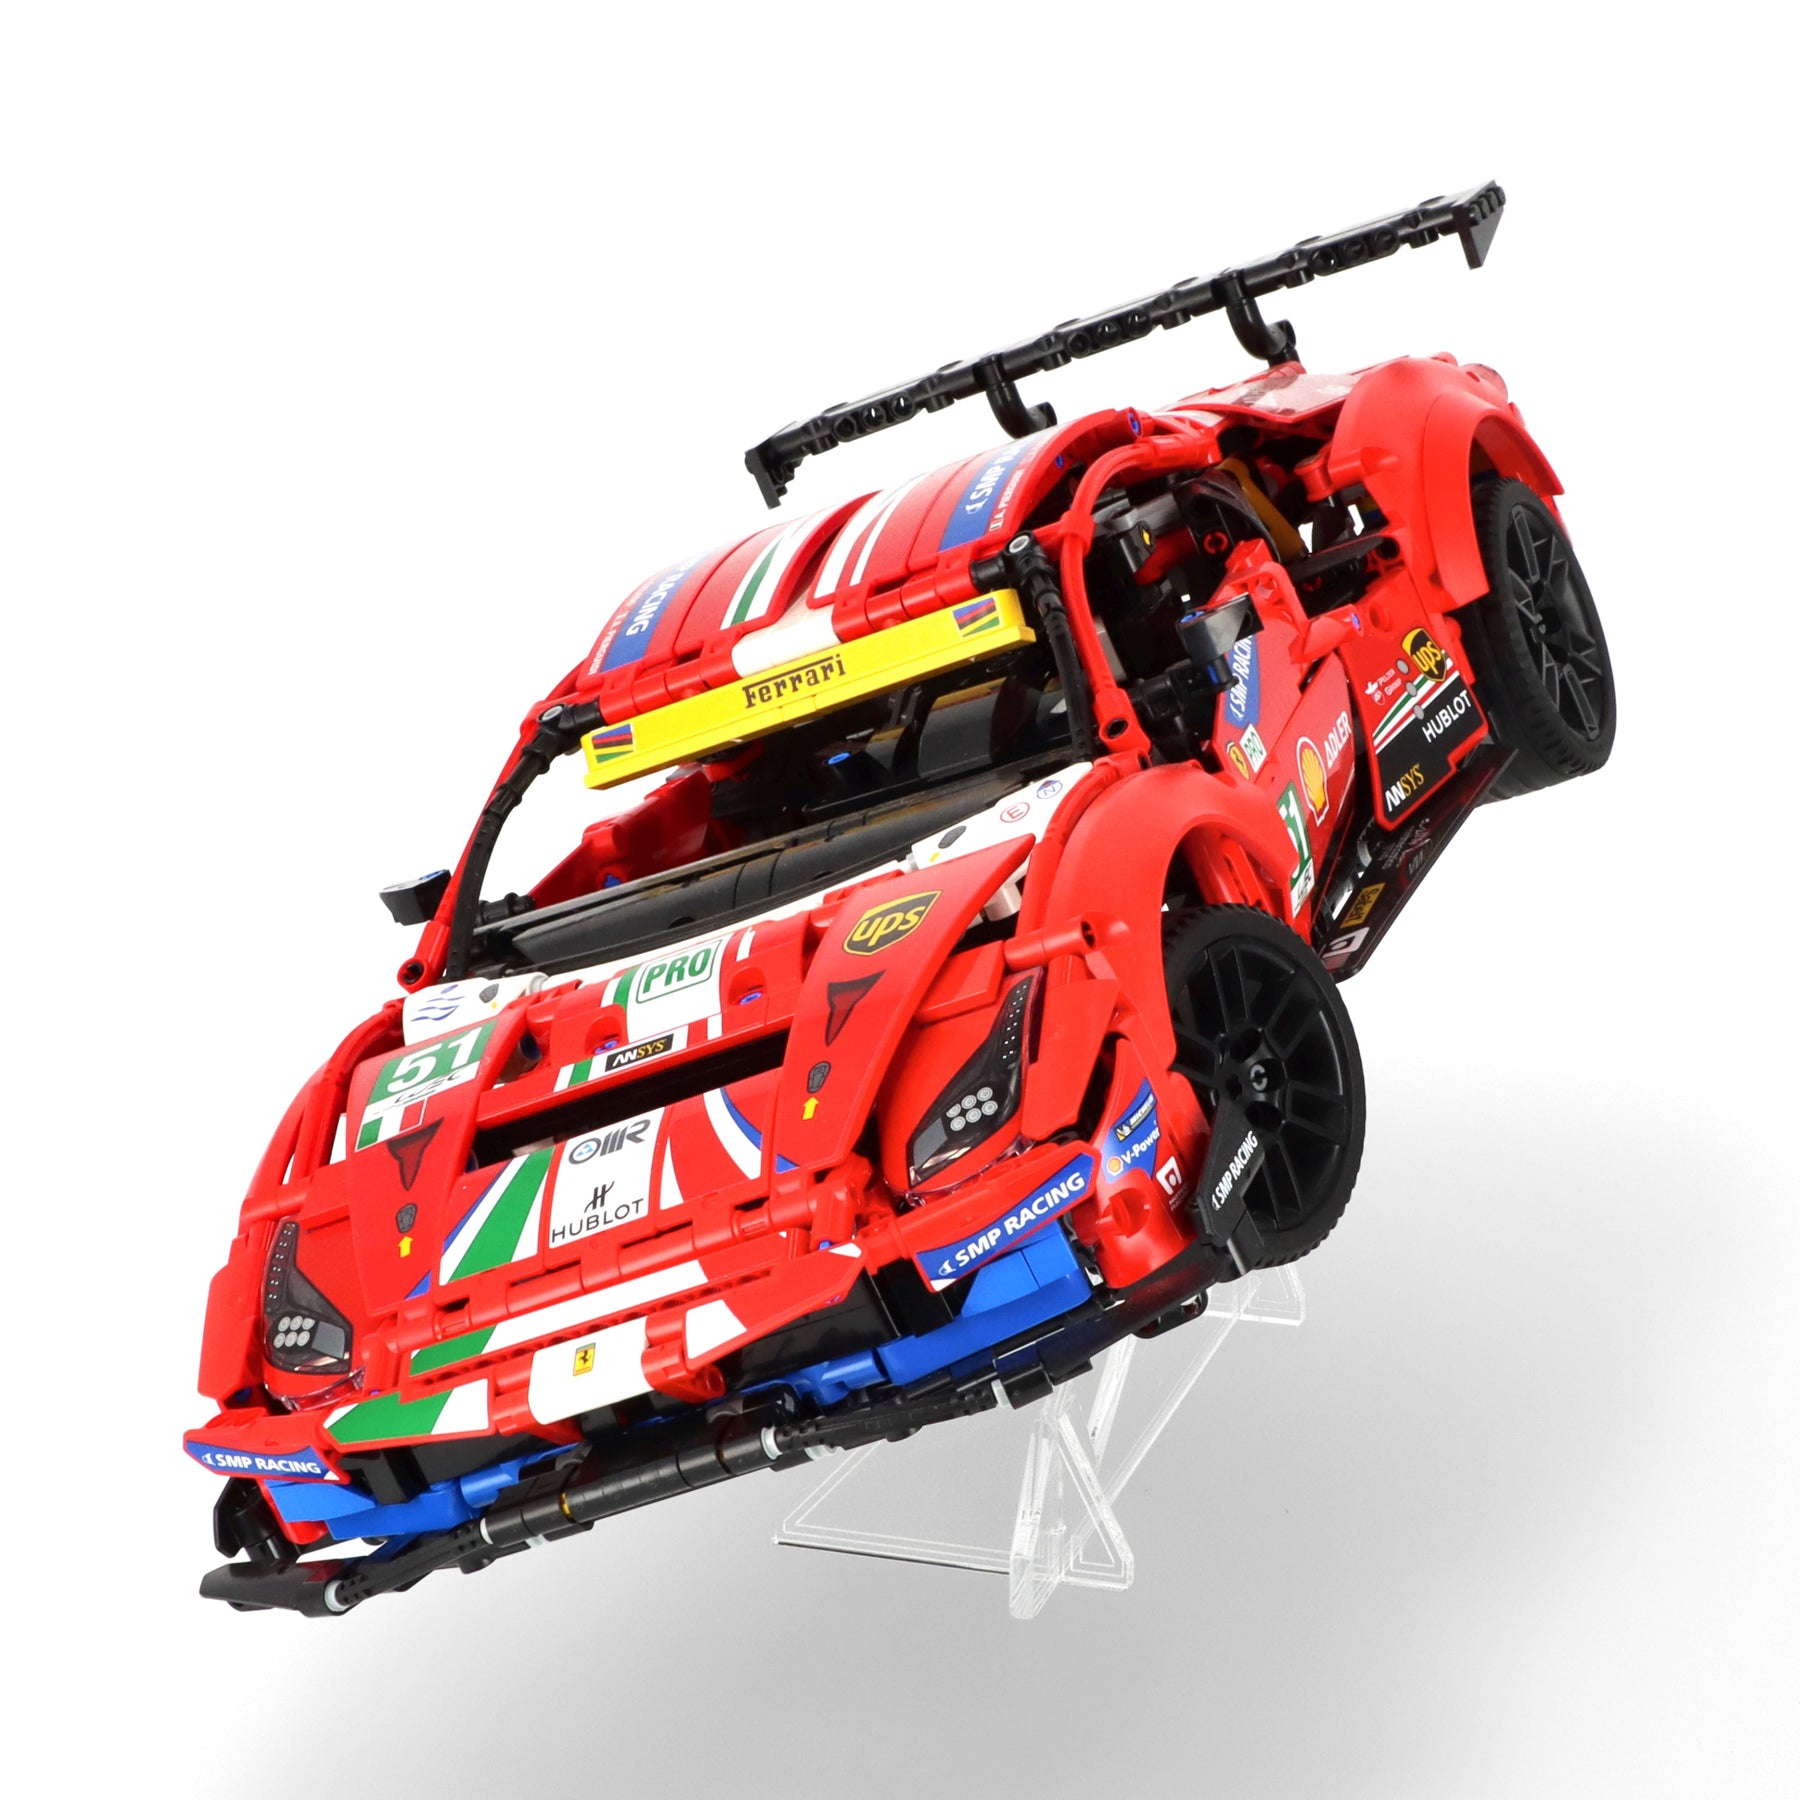 LEGO Ferrari 488 GTE 42125 Display Stand